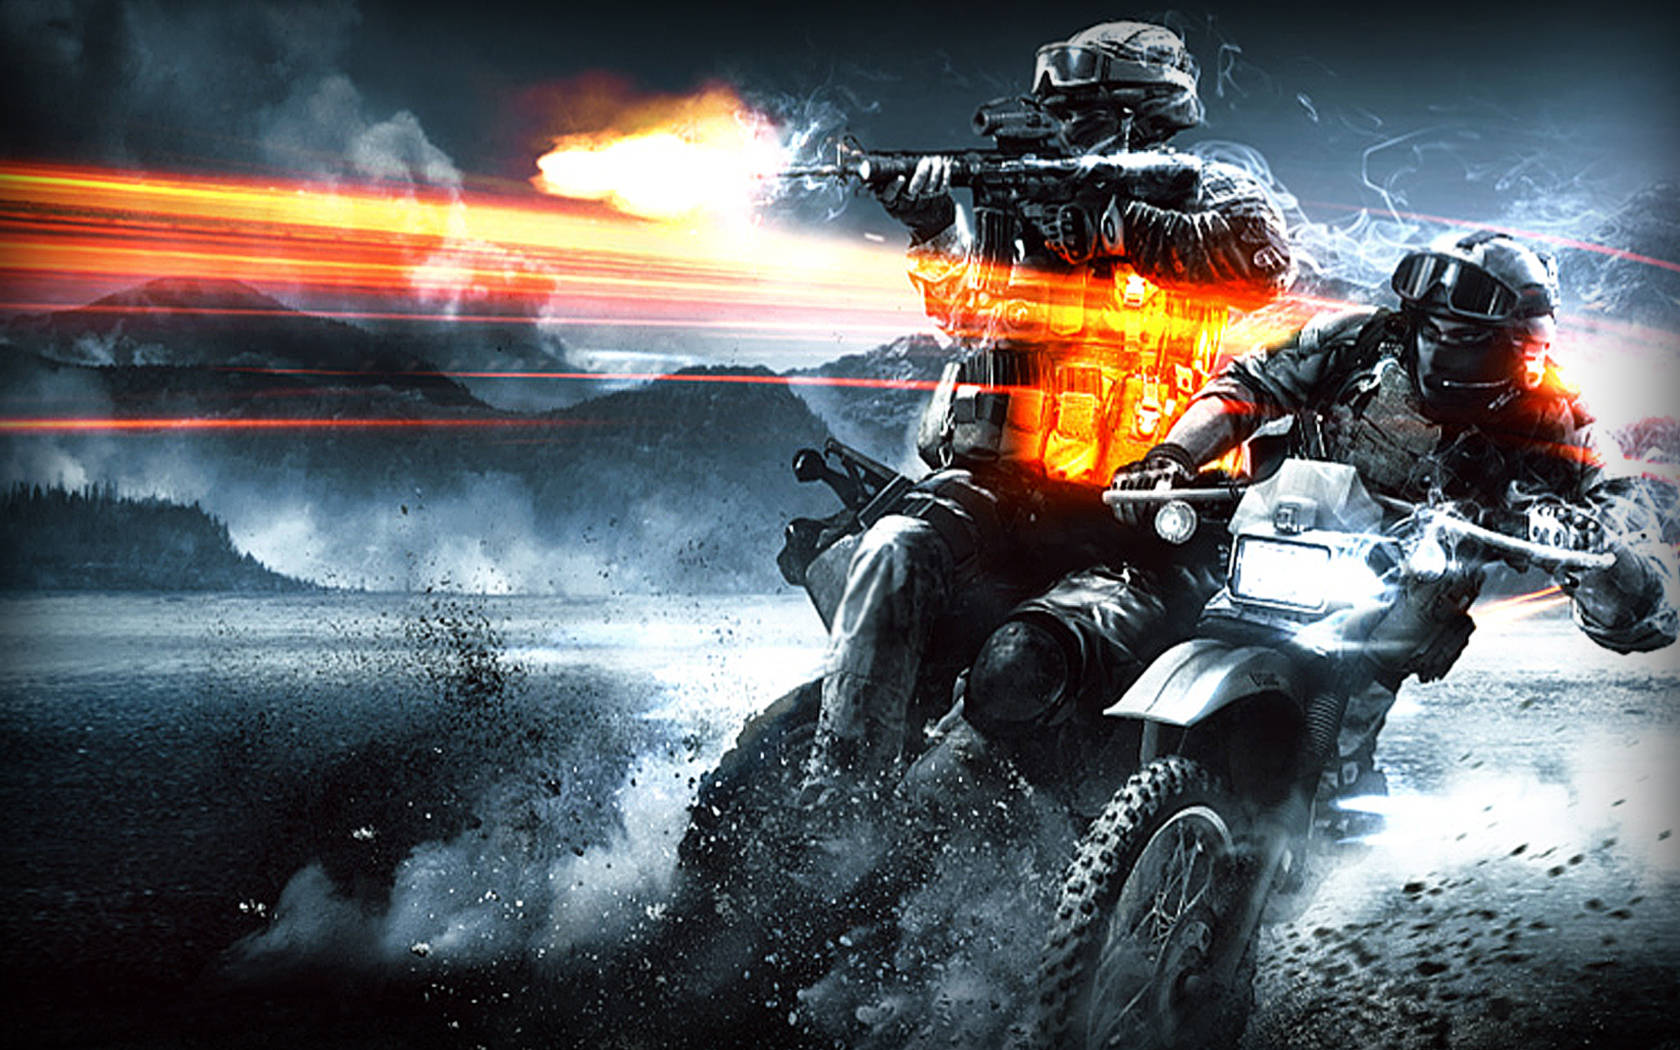 Cool Battlefield 3 soldater på motorcykel film scene Wallpaper